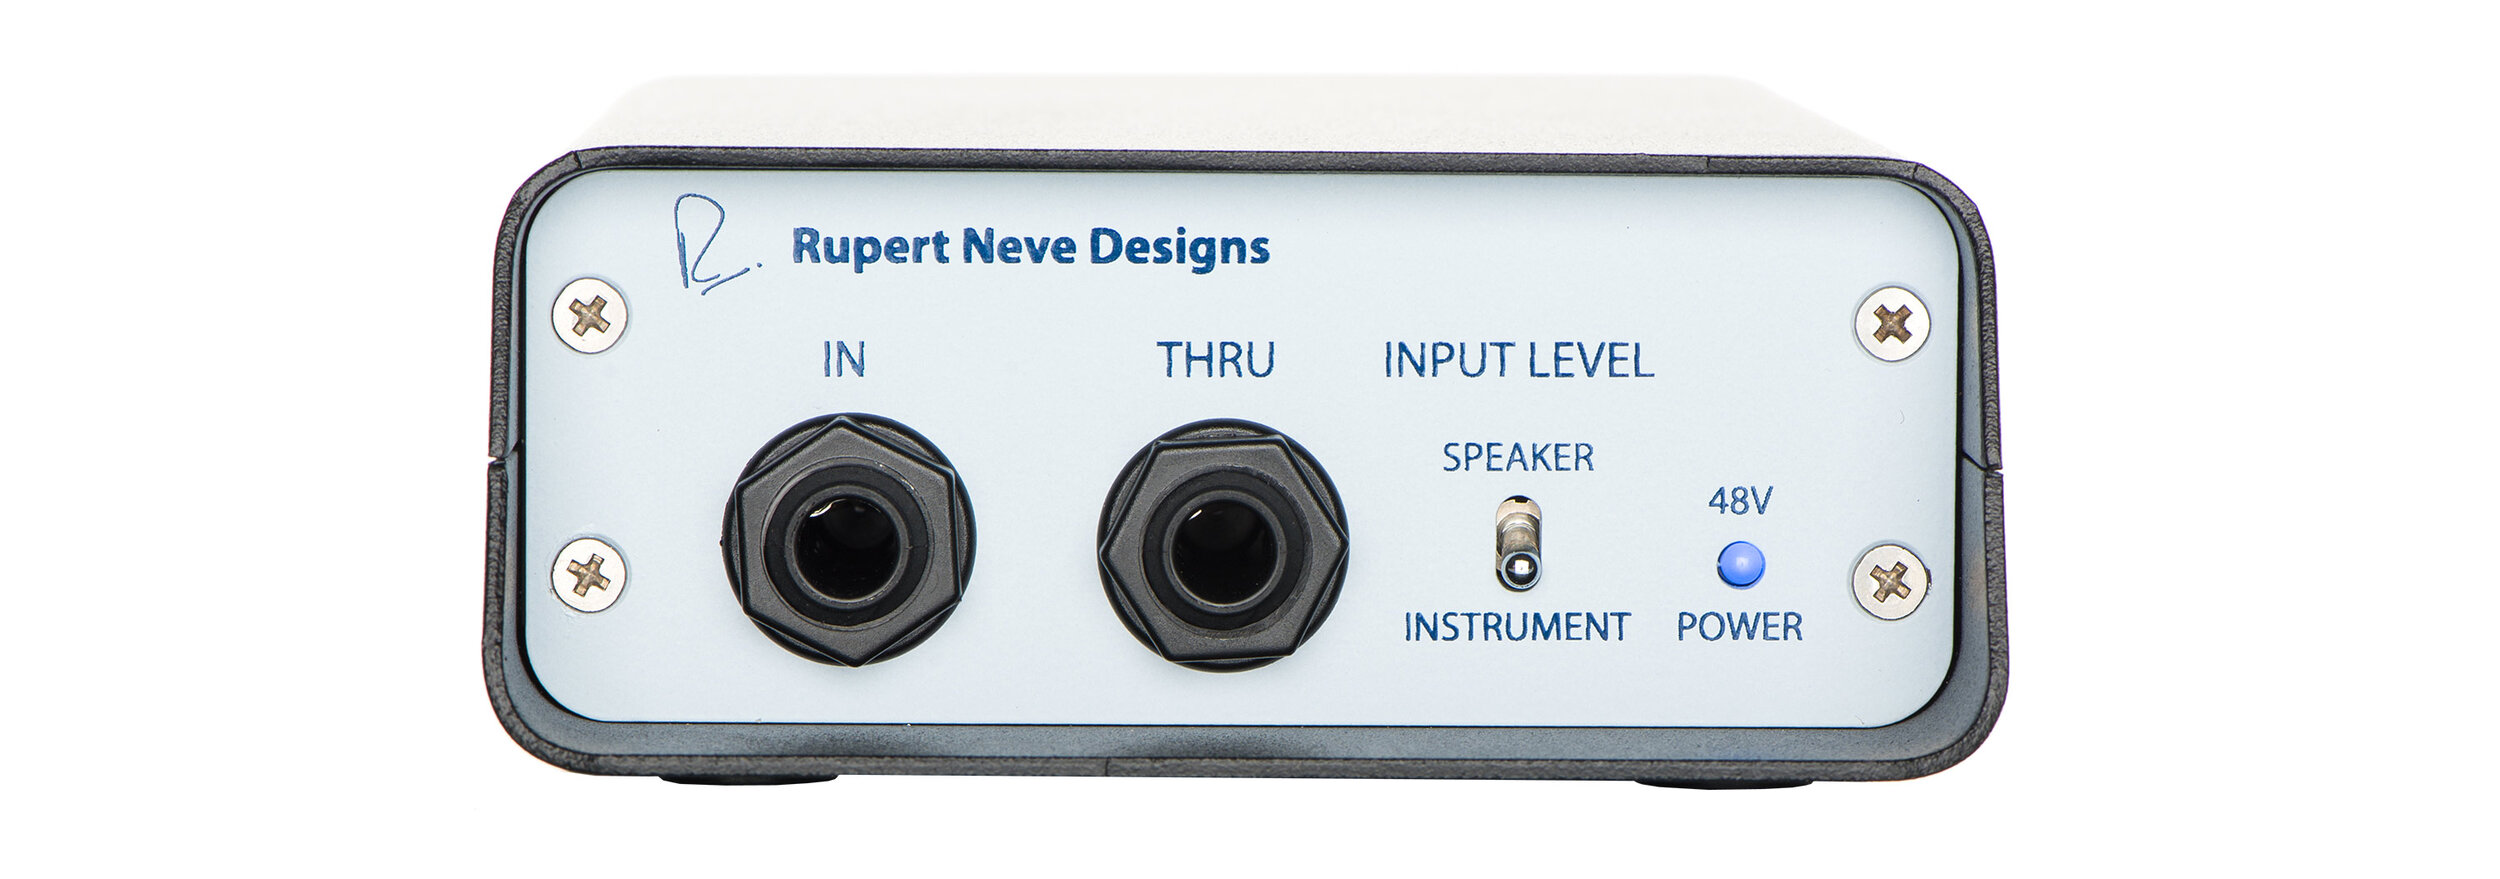 The RNDI Active Transformer Direct Interface — Rupert Neve Designs